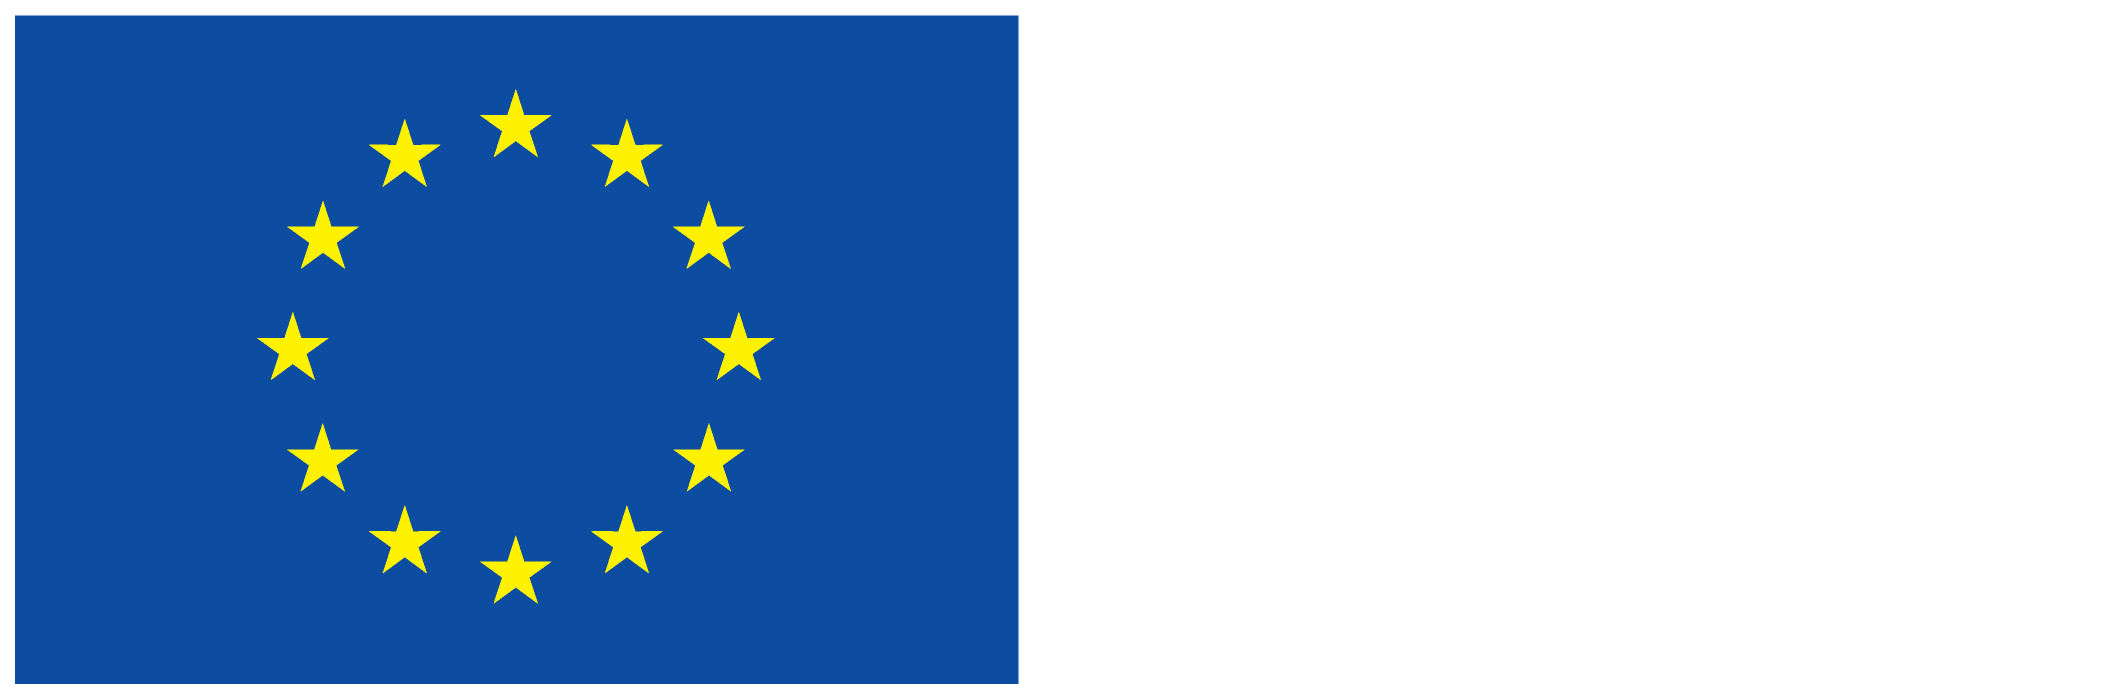 Eu Logo - European Union Flat Flag (3383x1012), Png Download